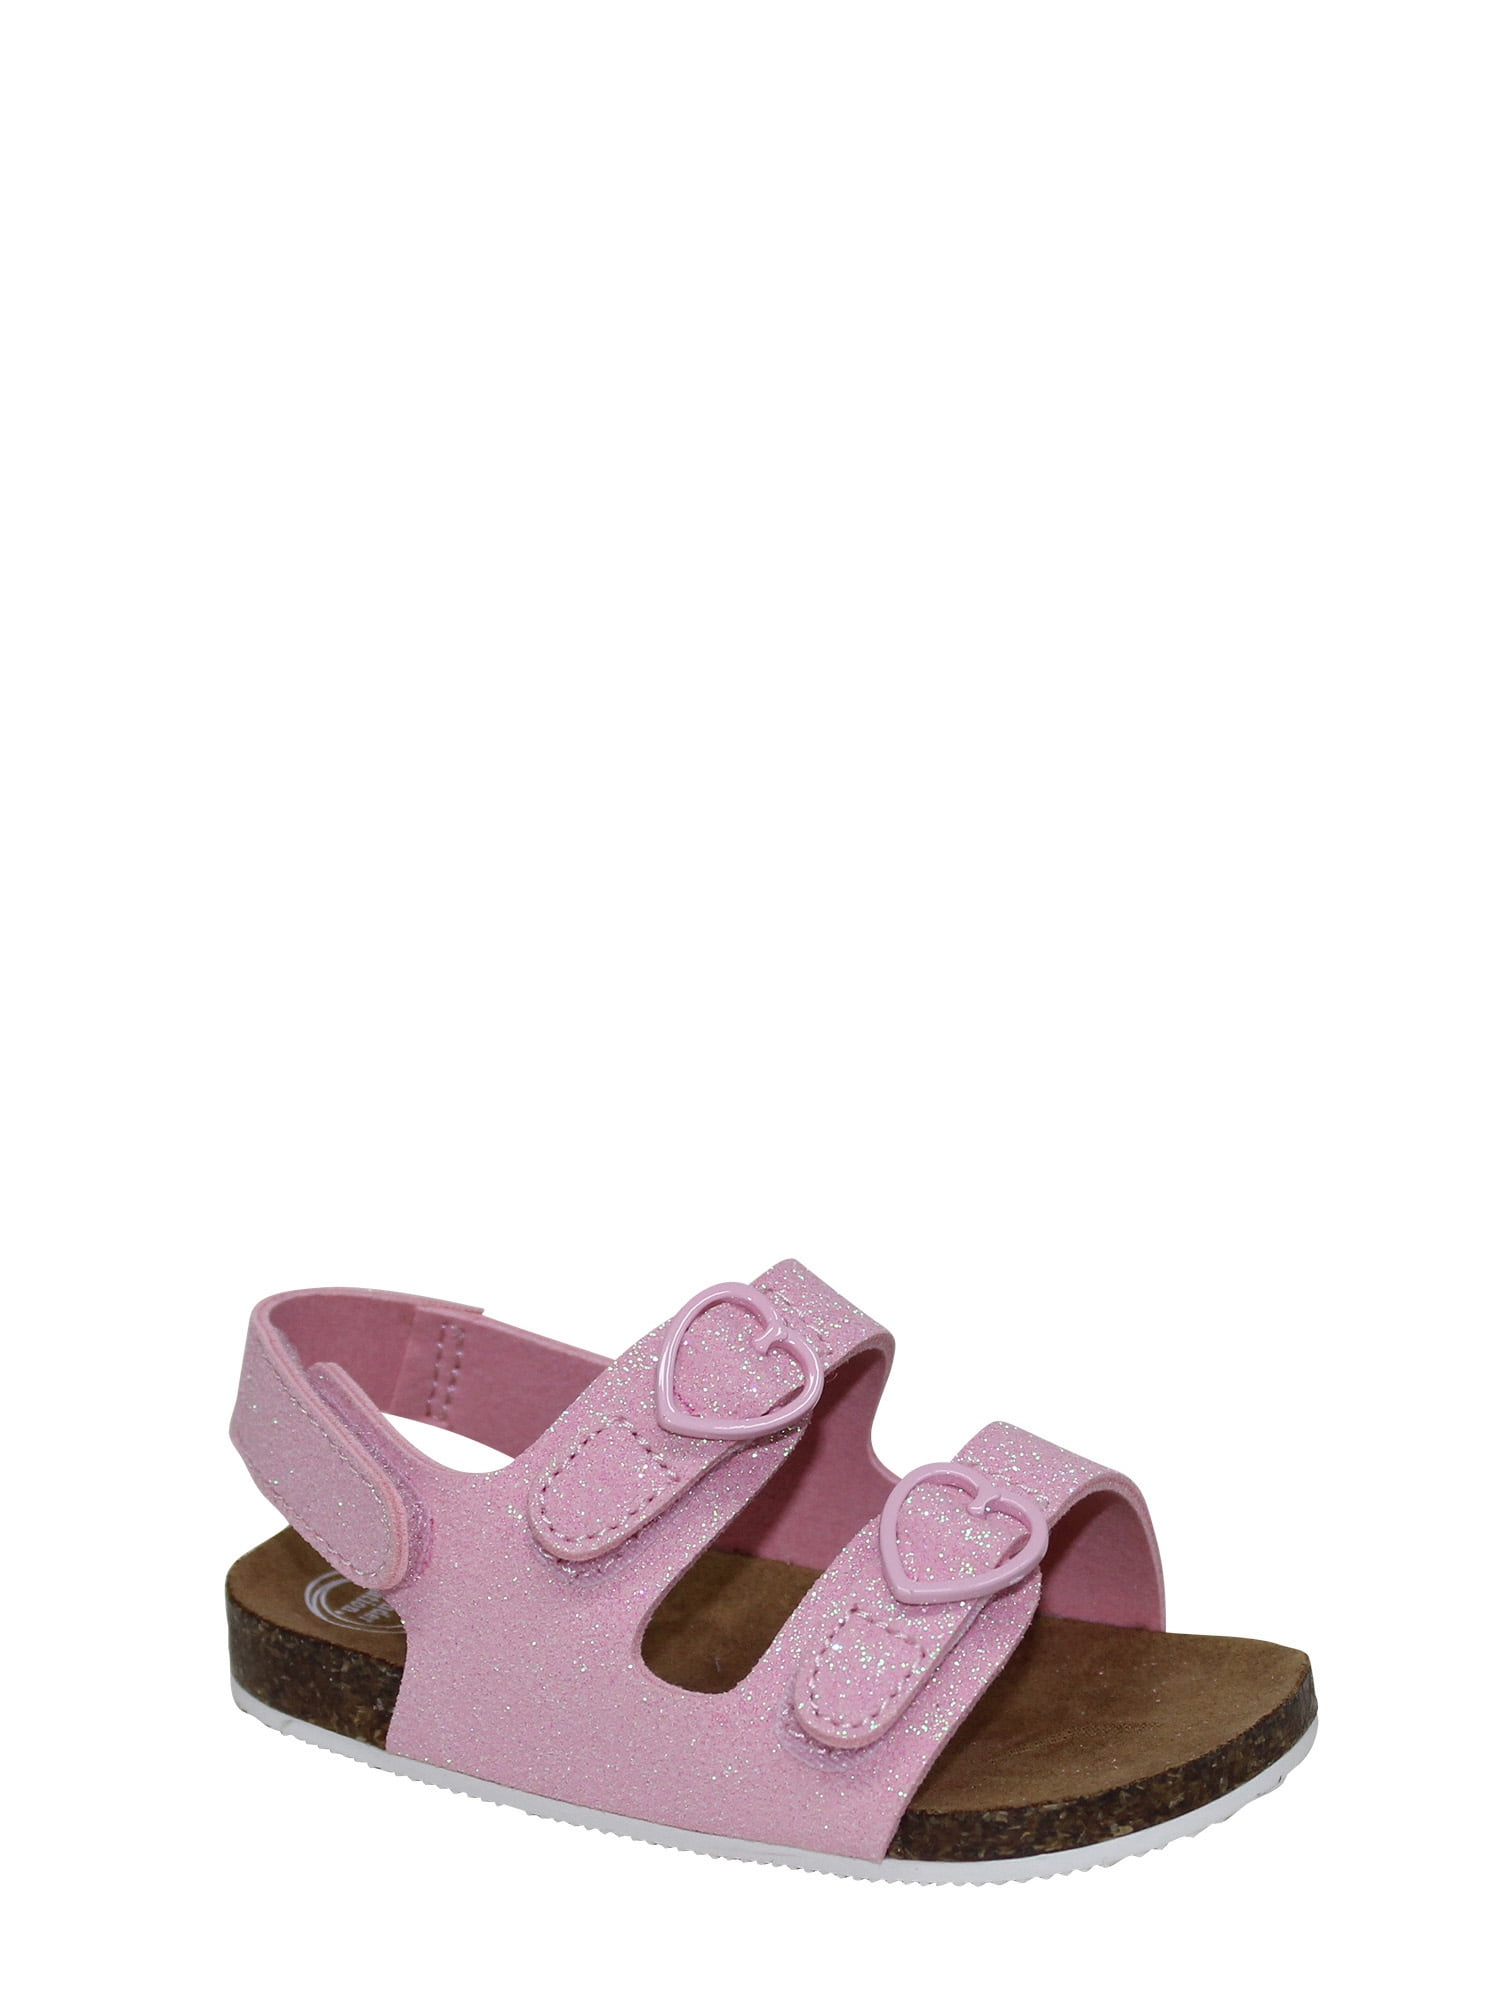 Gymboree Size 5 6 7 8 Purple Flower Cork Wedge Sandals Dressed Up Toddler Girls 